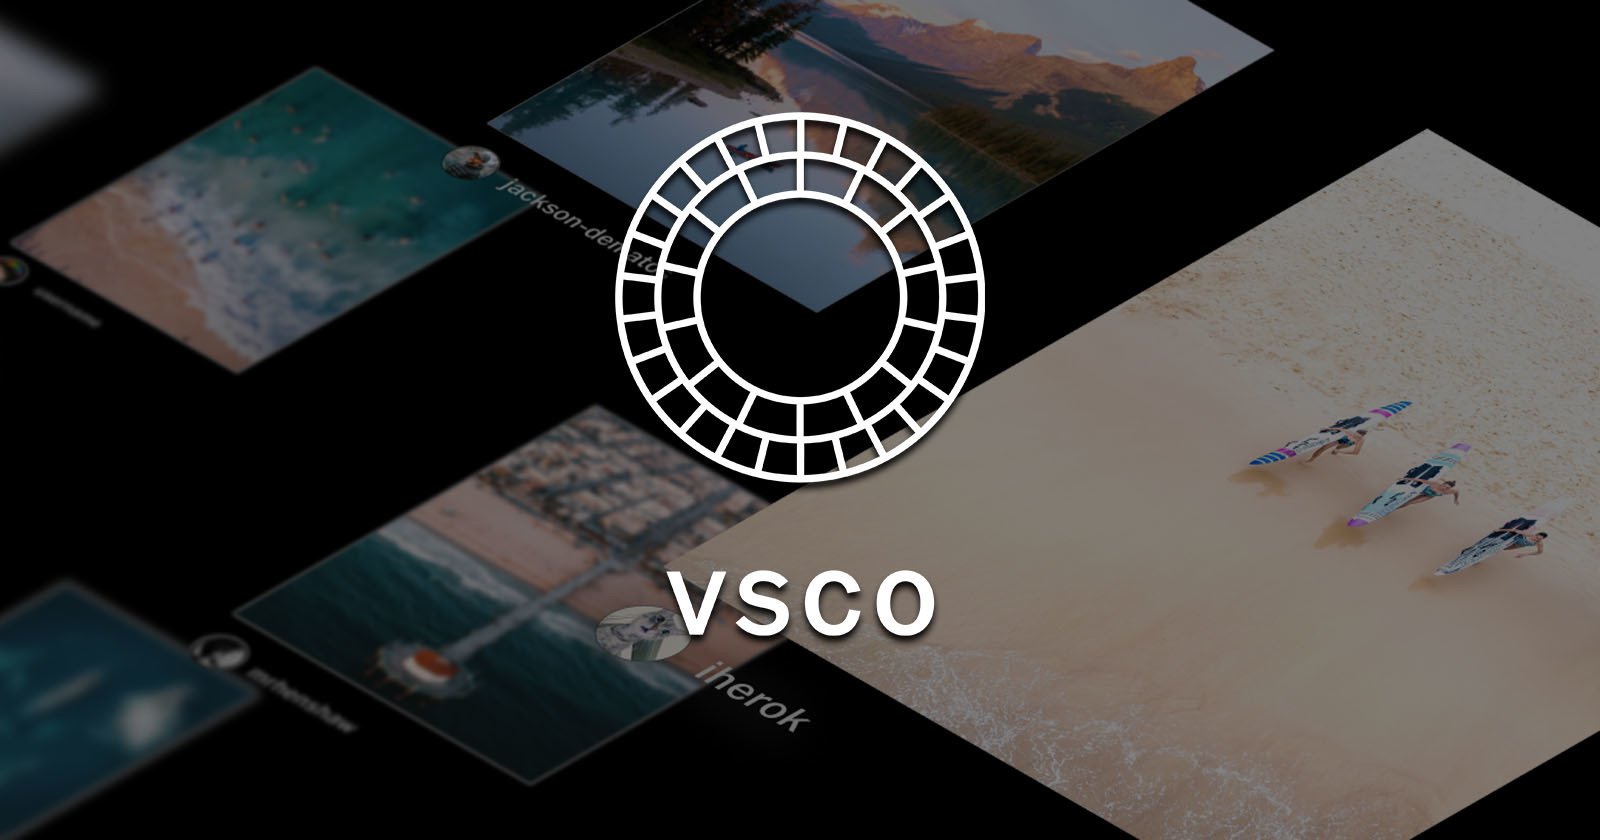  vsco social network-like spaces community now open all 